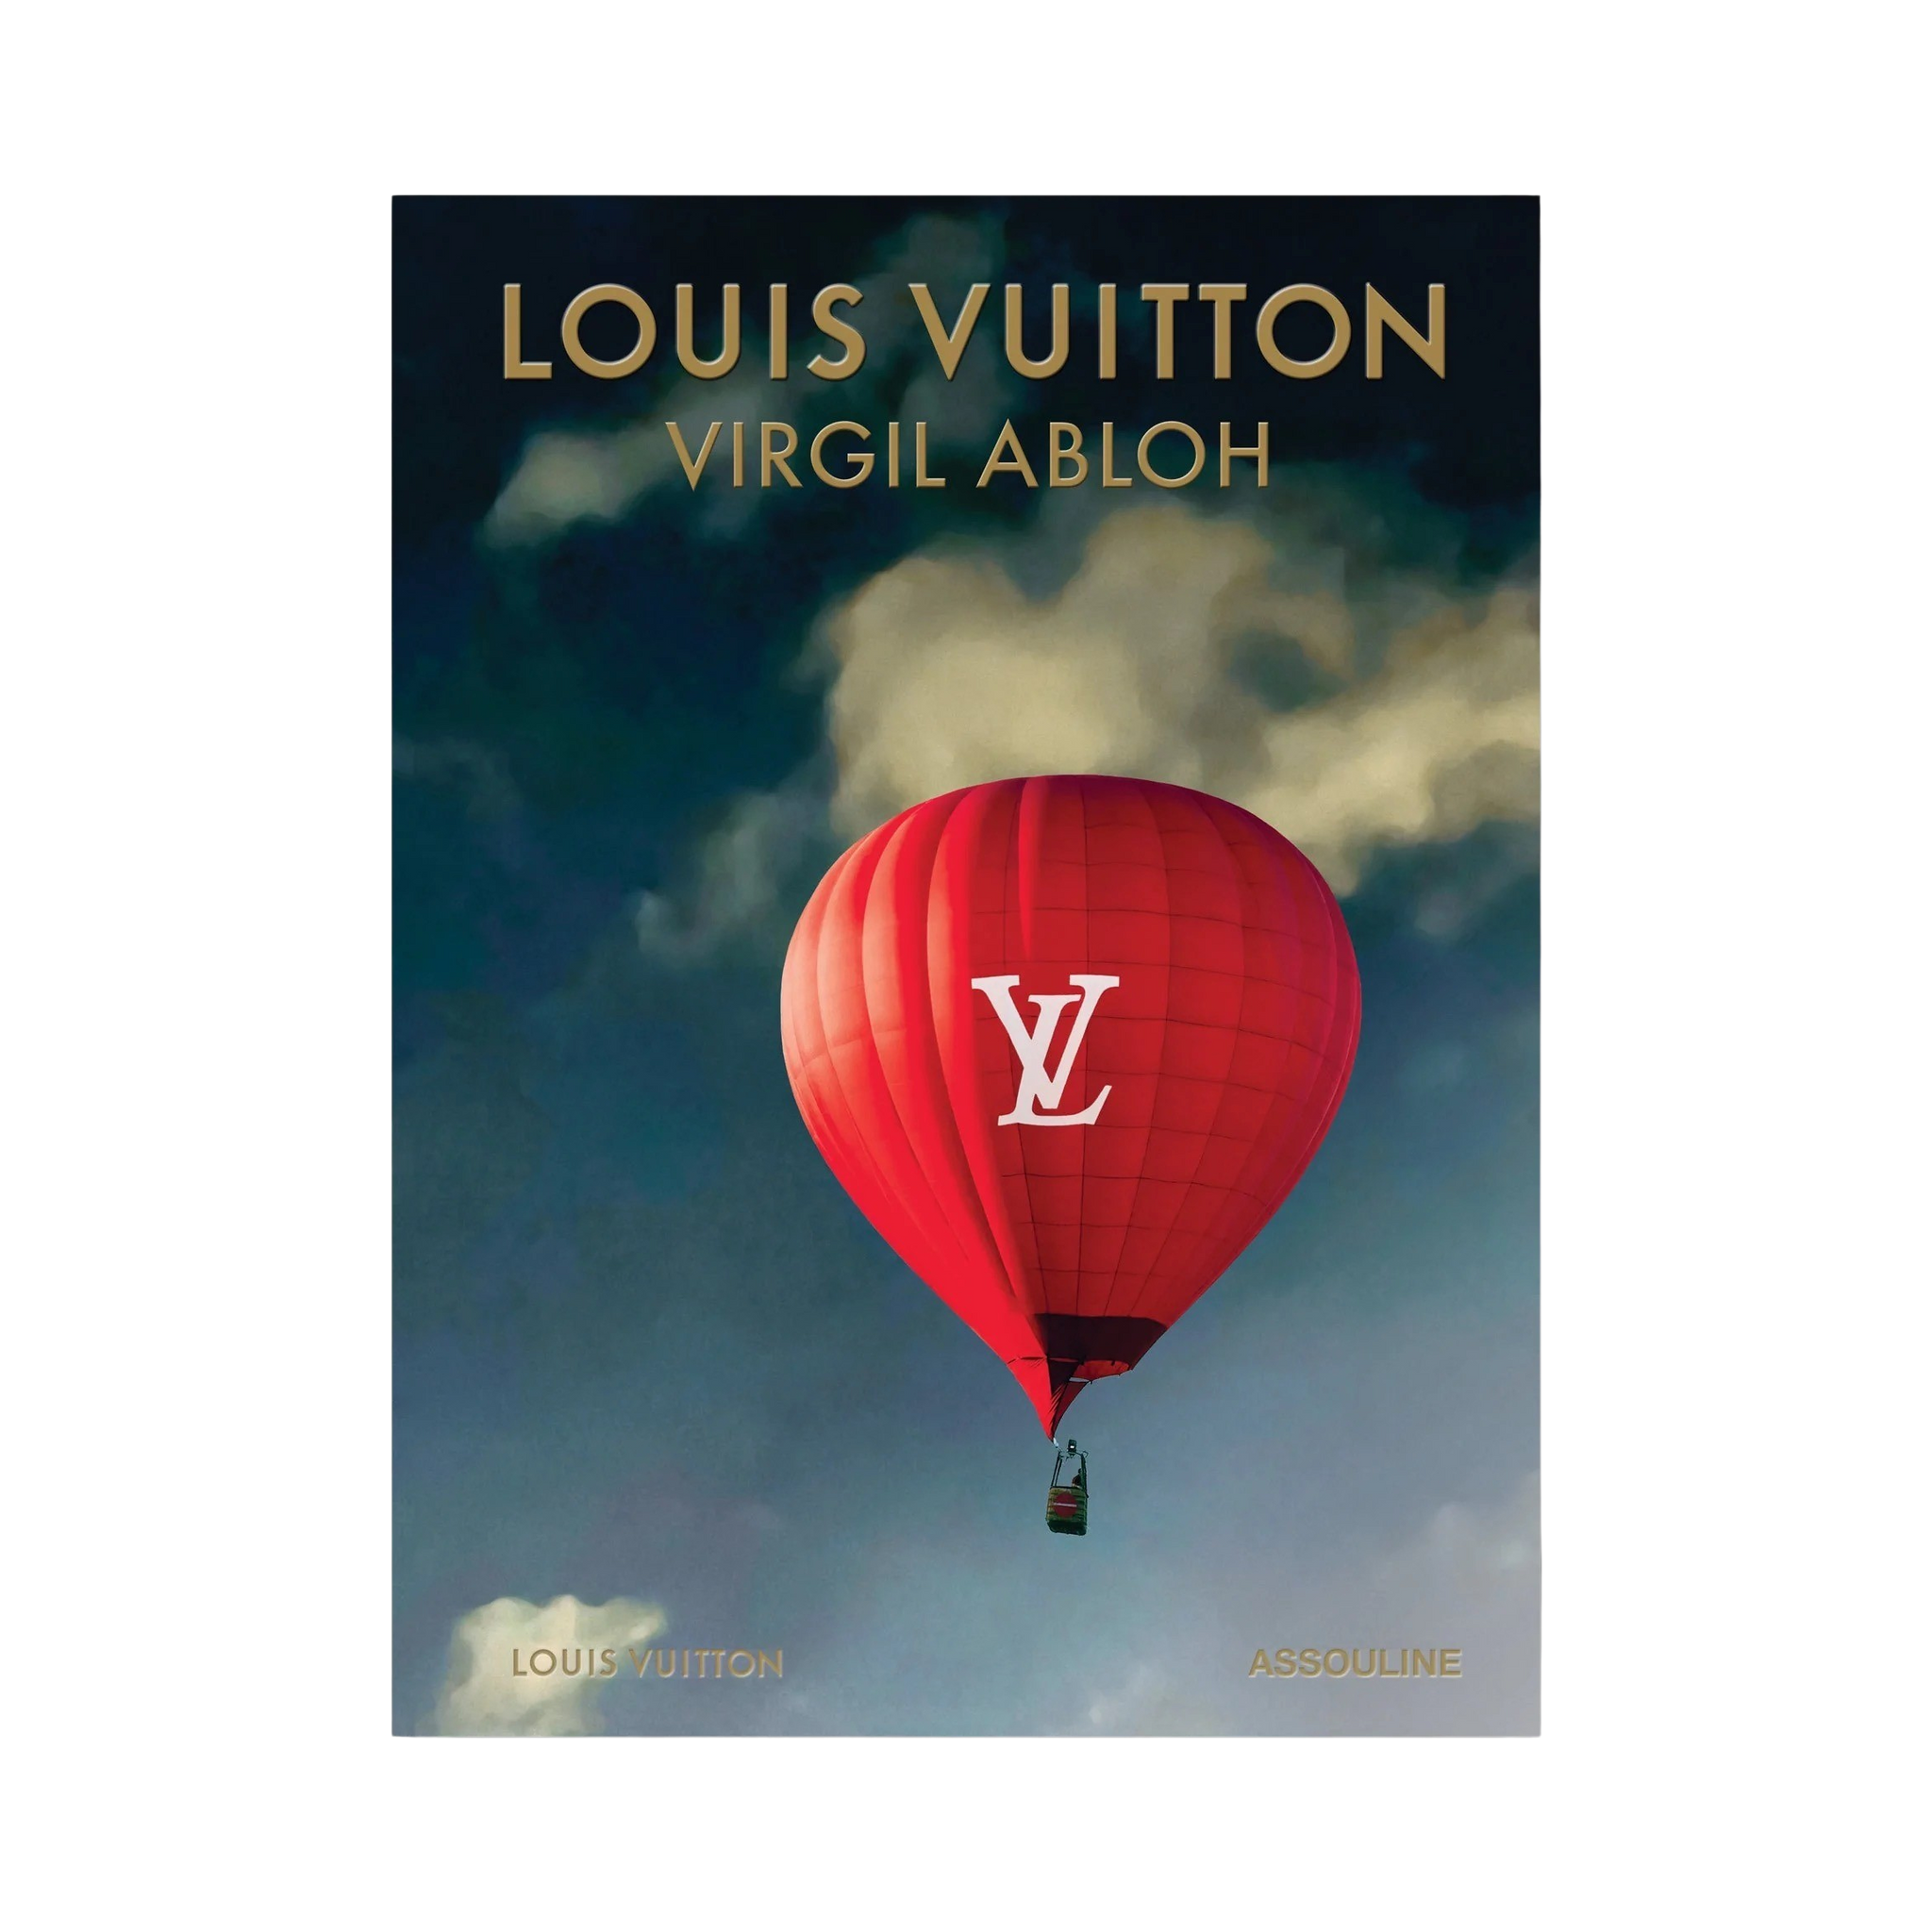 88761 Assouline Louis Vuitton Virgil Abloh Coffee table book   areastorecom